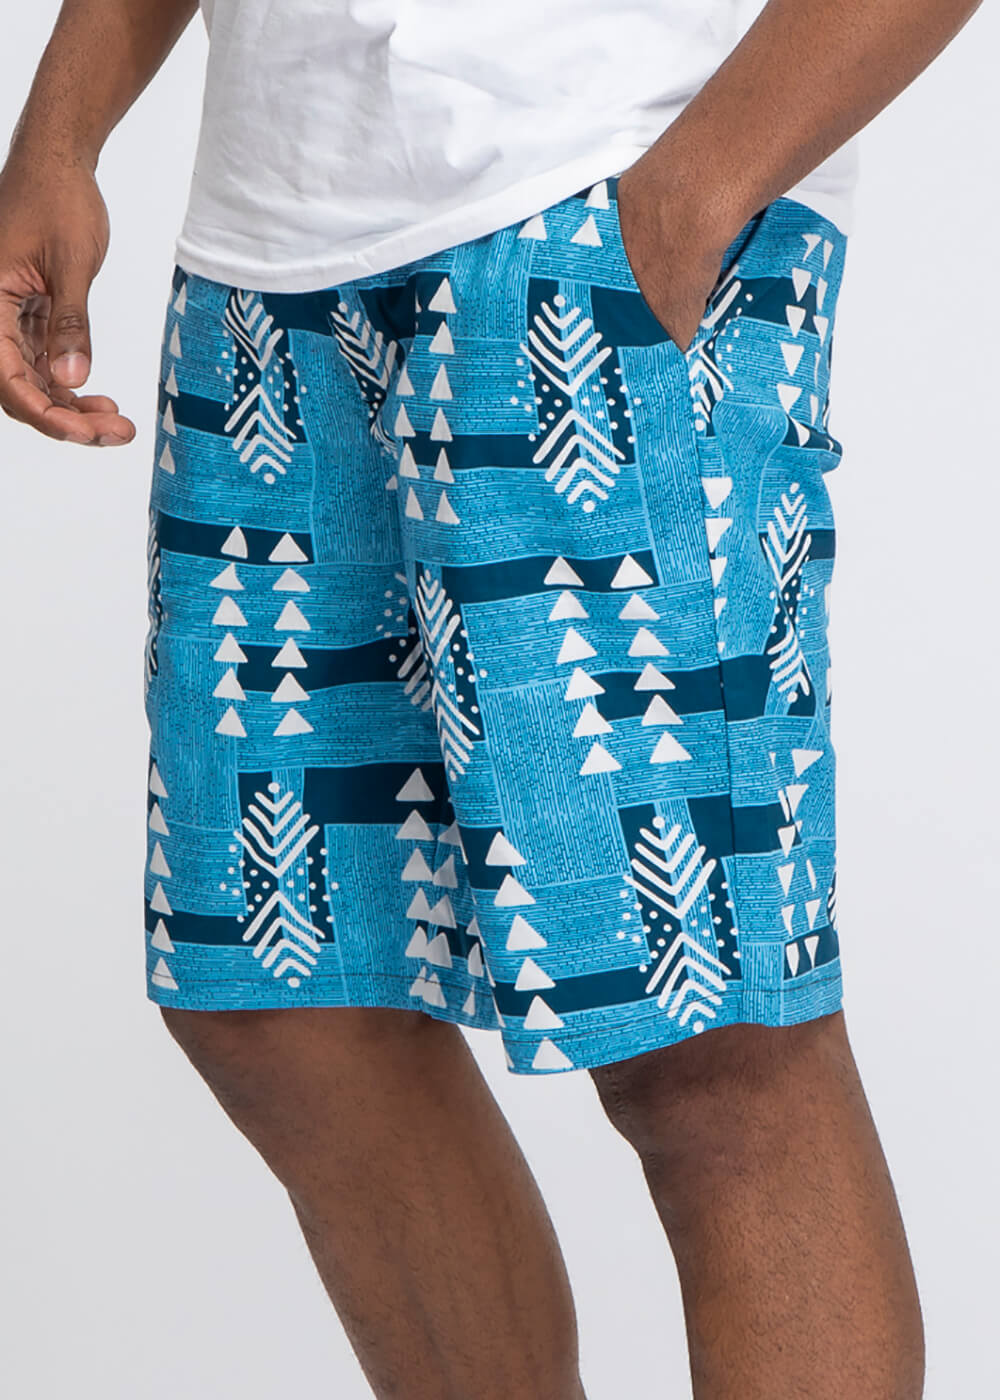 Debare Men's African Print Shorts (Navy White Mudcloth)